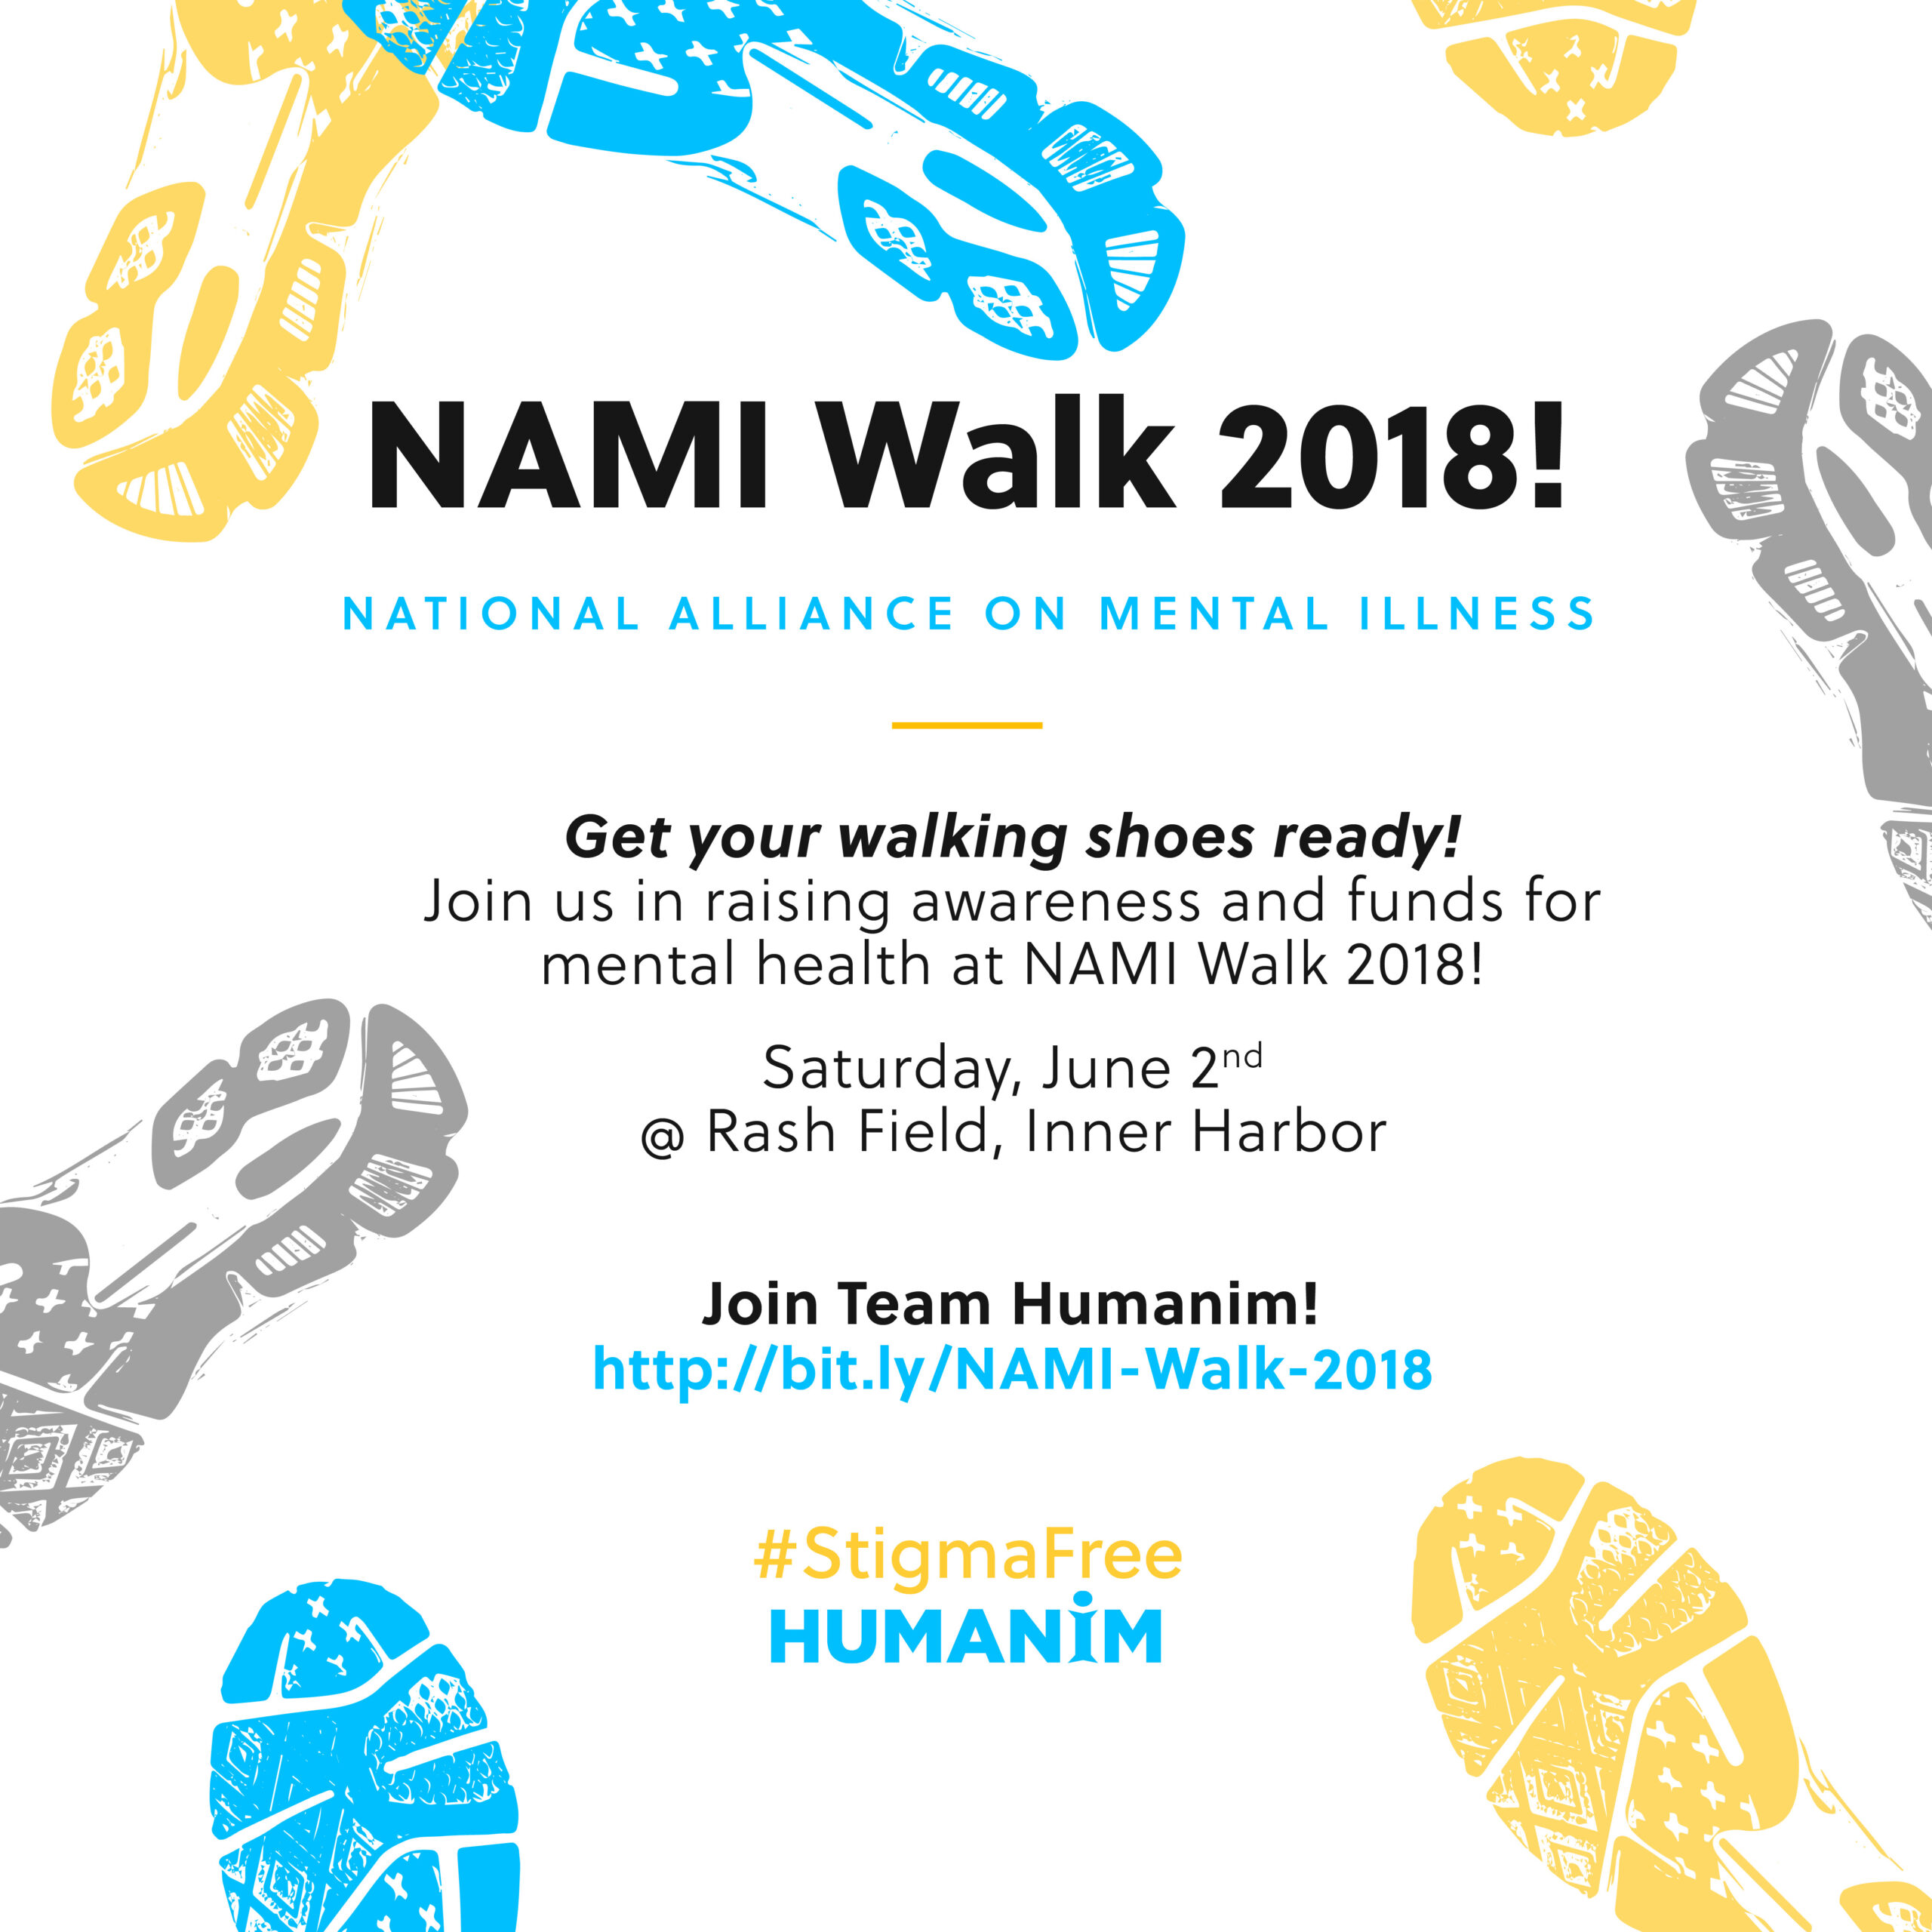 Join Team Humanim for NAMI Walk 2018!